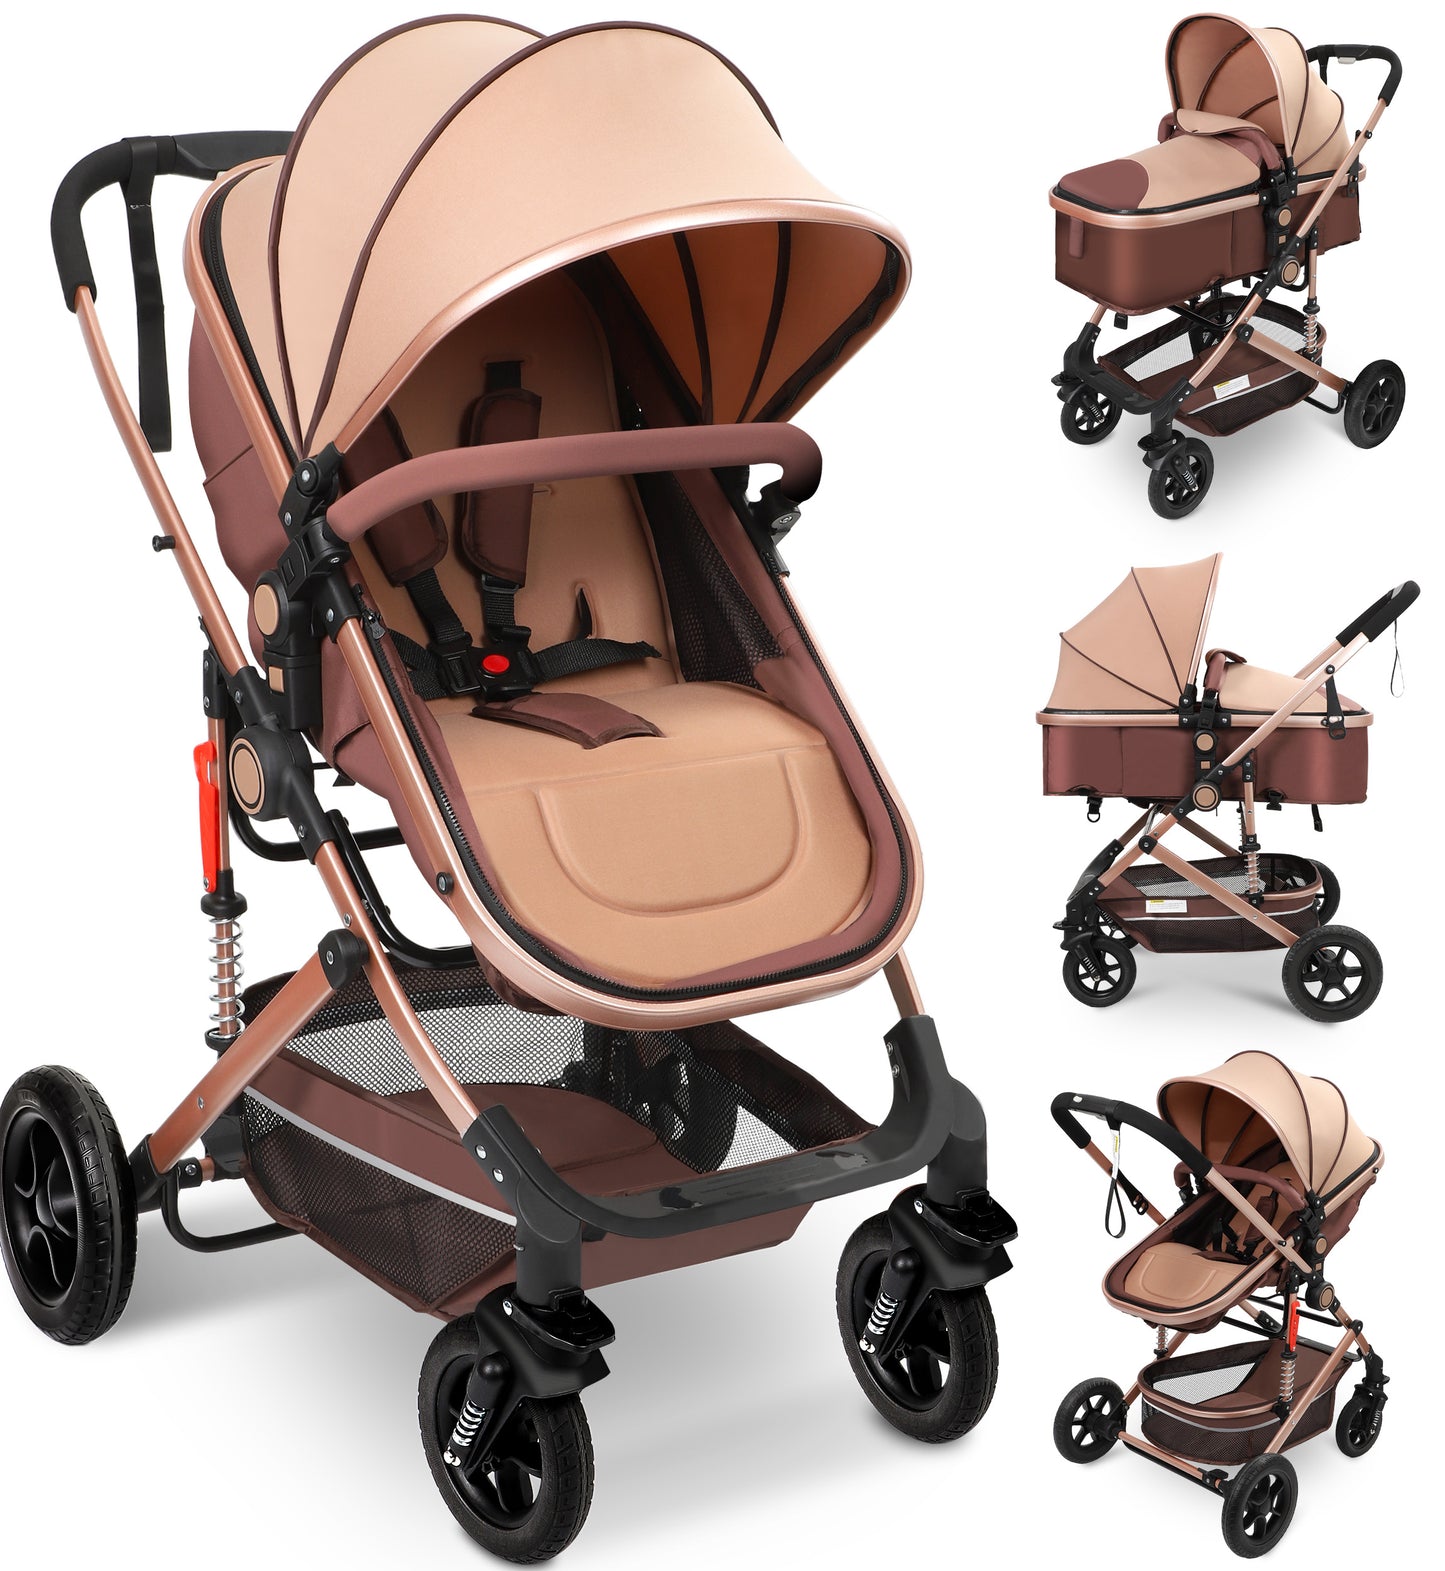 Vomeast Baby Stroller, Foldable Baby Stroller Reversible Bassinet, Travel Stroller for Newborn Baby